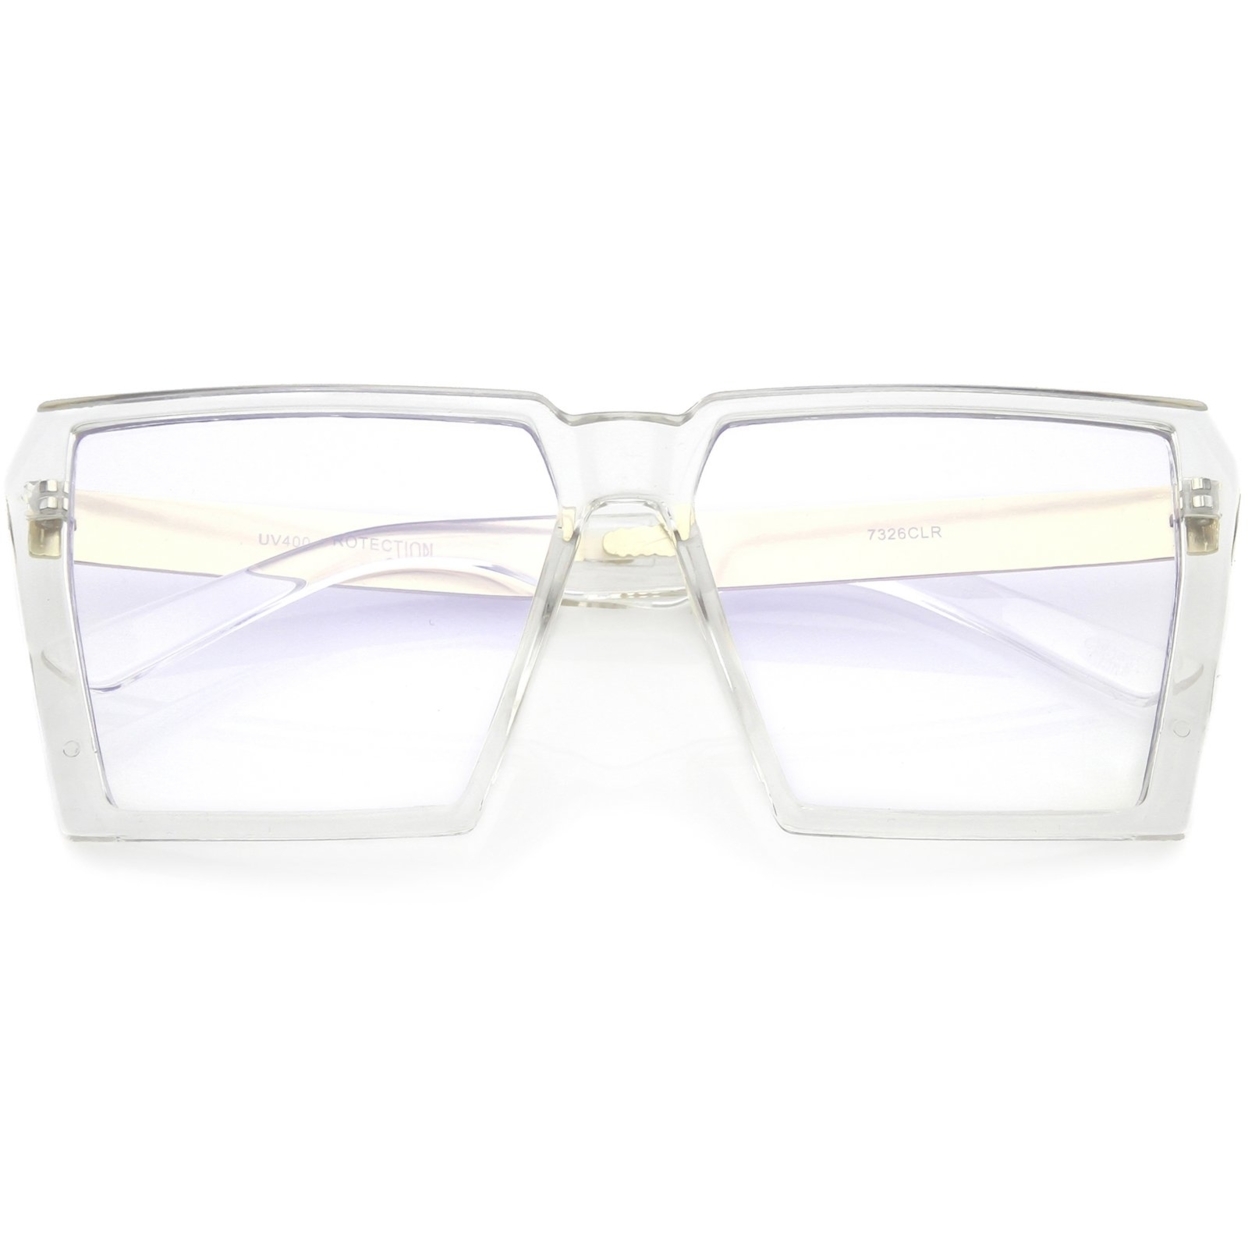 Oversize Modern Chunky Square Eyeglasses Flat Clear Lens 60mm - Tortoise Gold / Clear